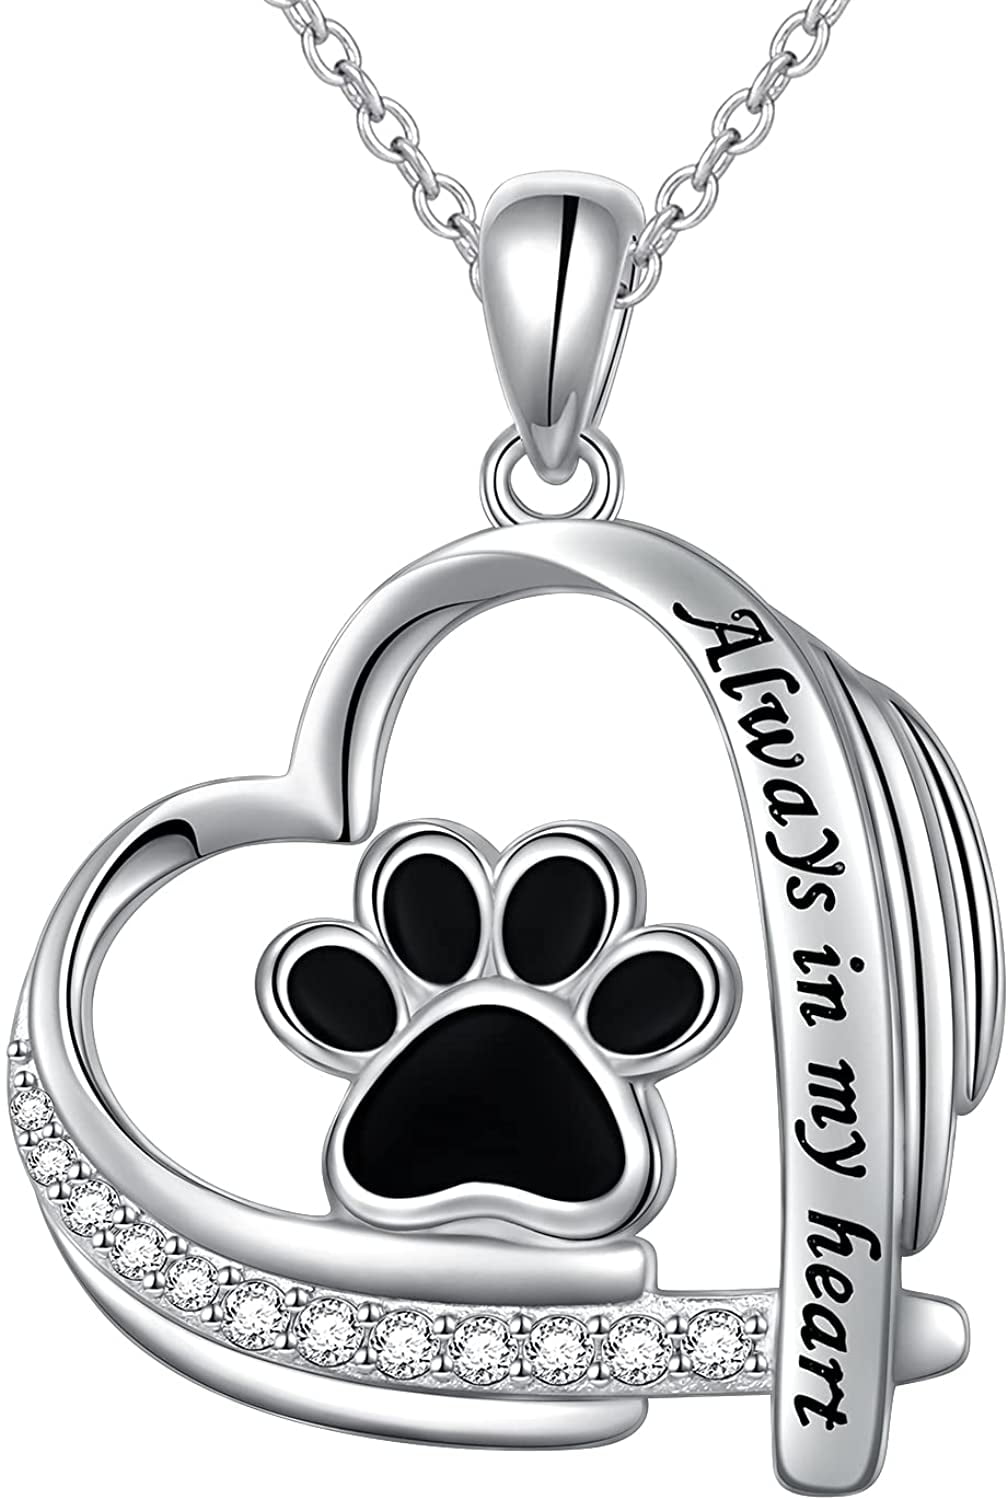 In Season Jewelry My Dog Paw Prints Animal Love Photo Pendant Heart Locket Necklace 19